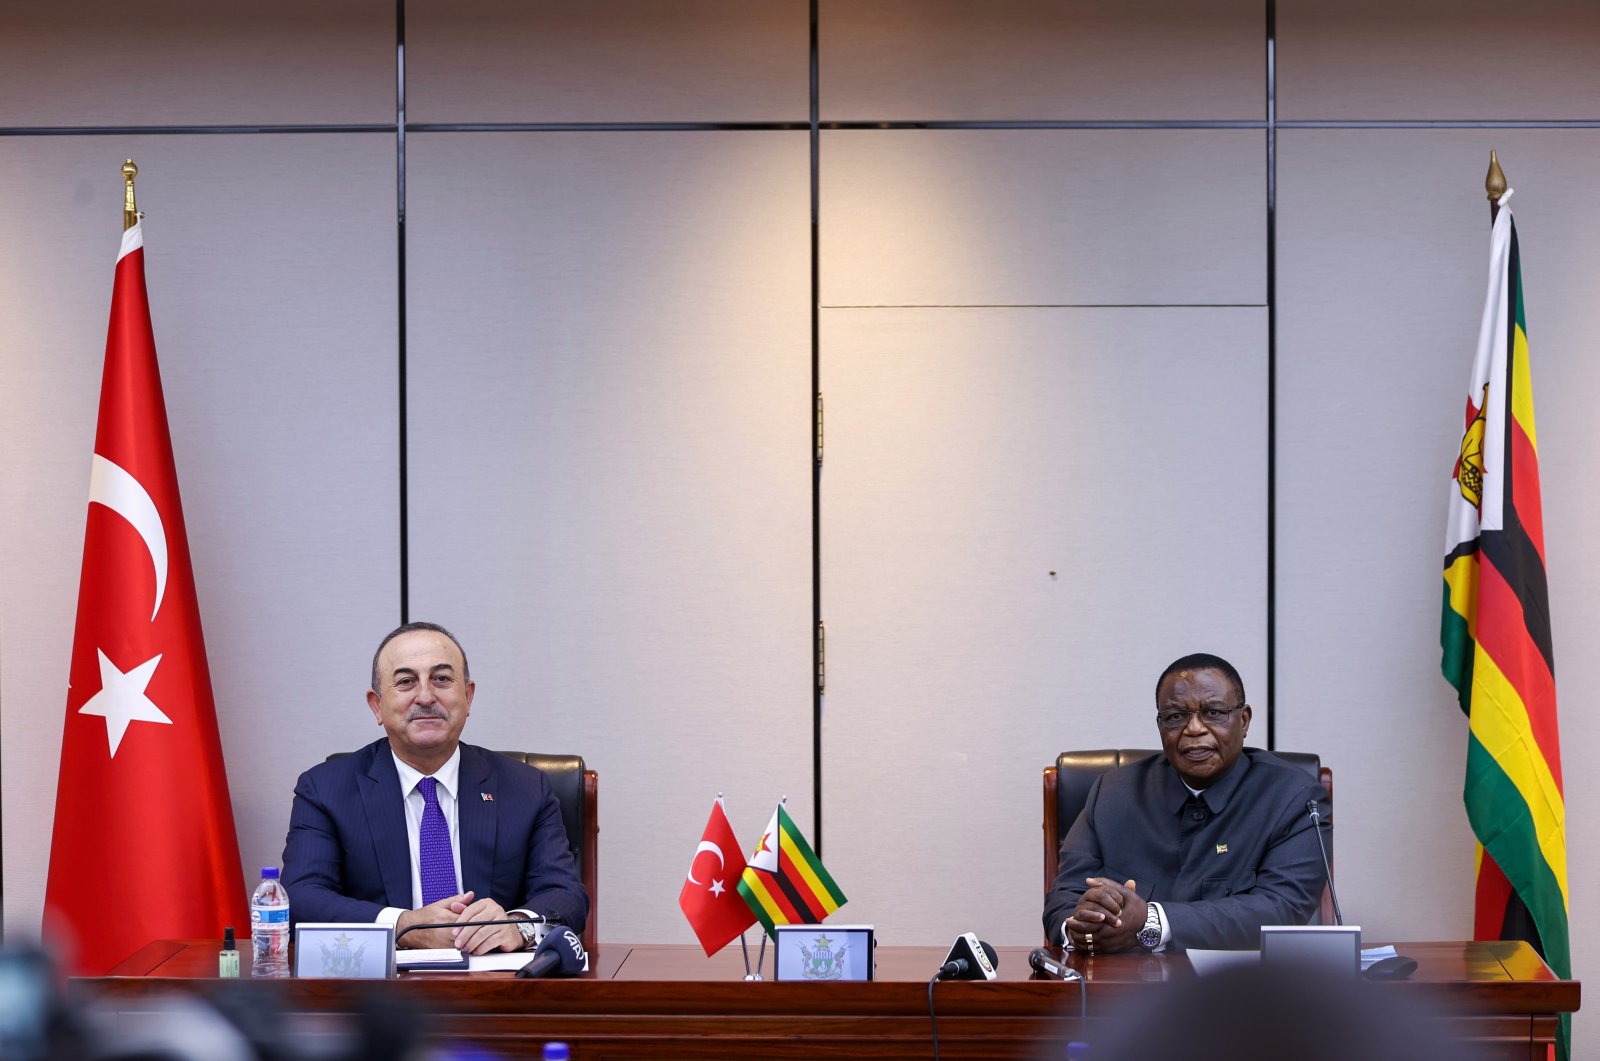 Türkiye, Zimbabwe poised to boost ties